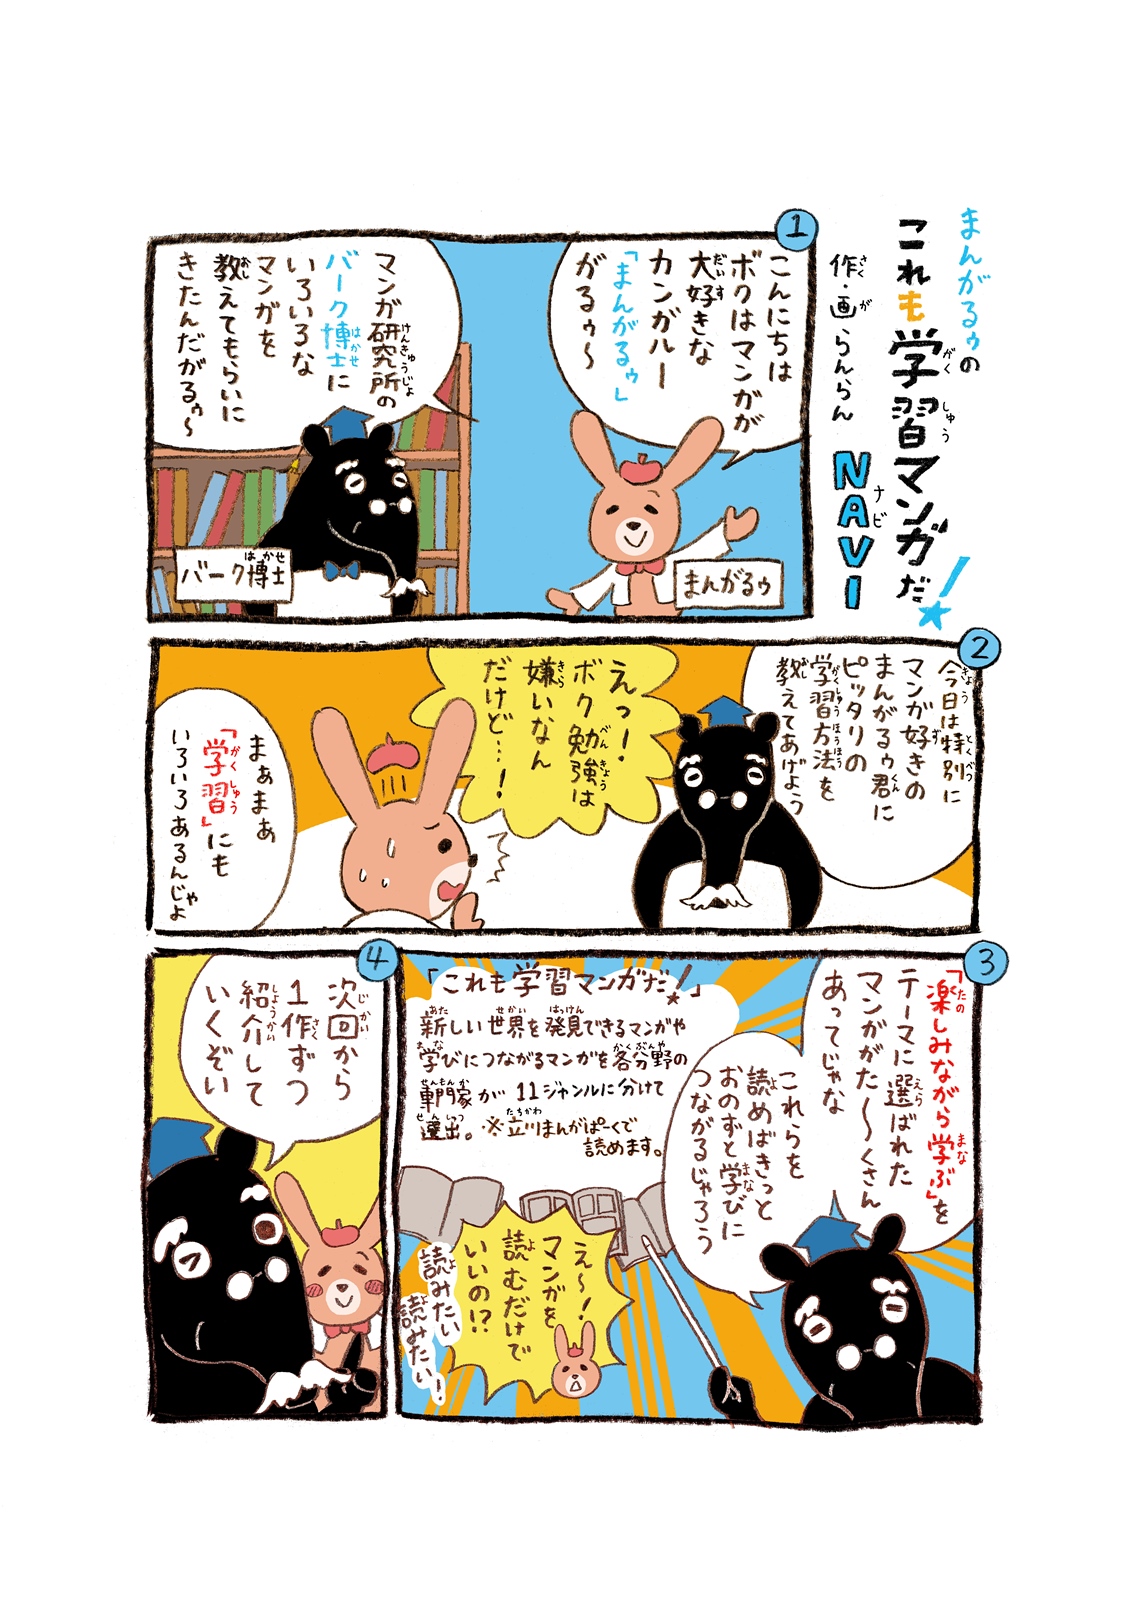 https://mangapark.jp/topics/2019/11/01/images/mangaloo_01_f1018_2.jpg